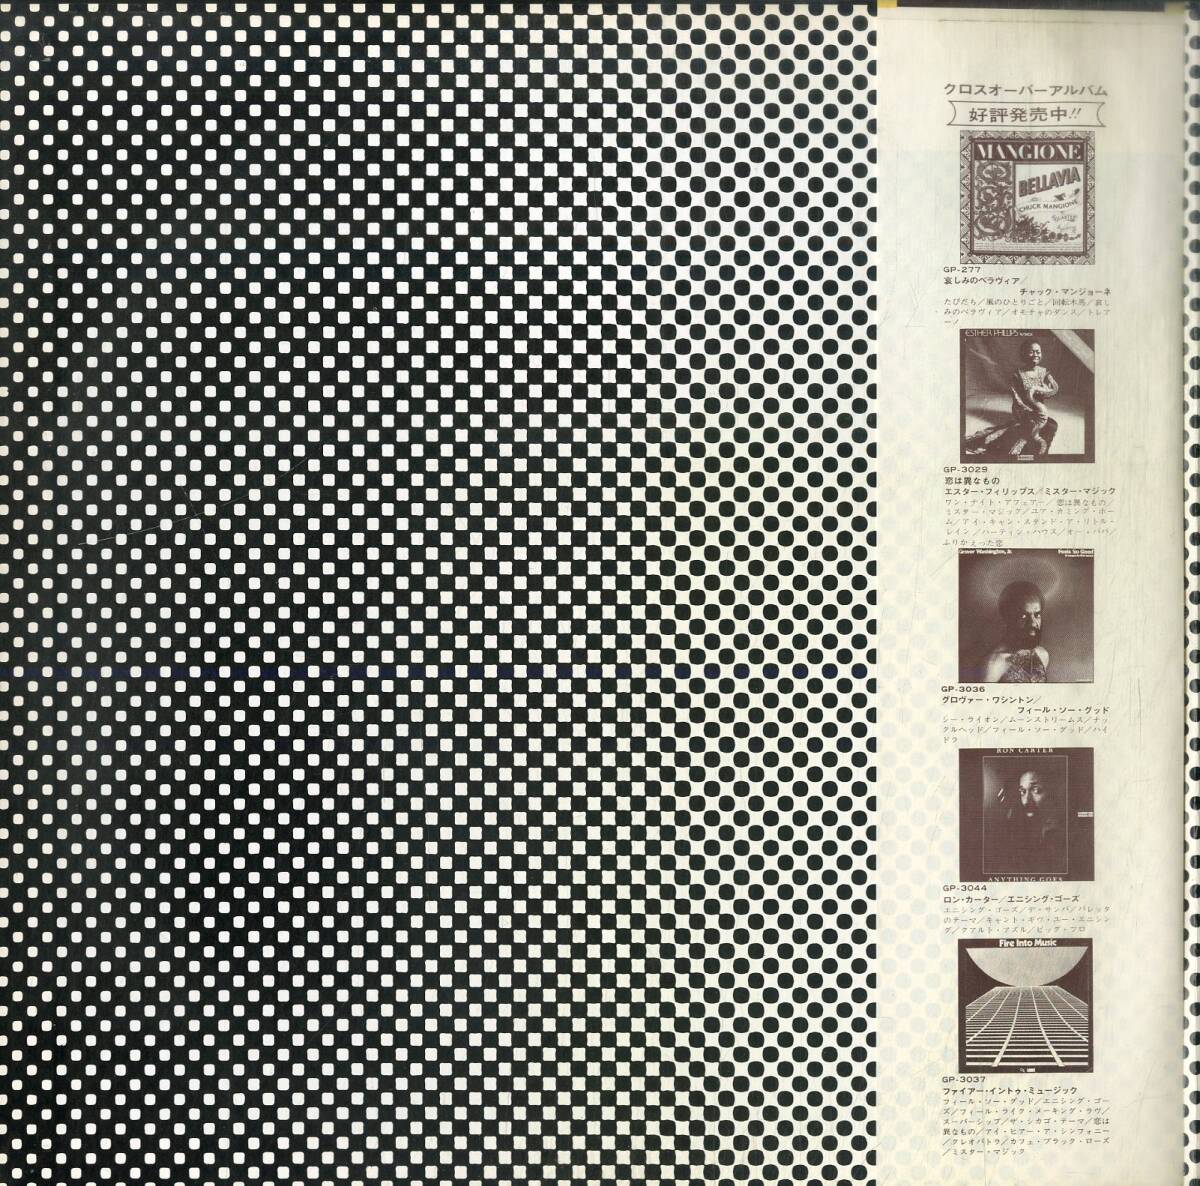 A00586117/LP/ボブ・ジェームズ「ボブ・ジェームズ 3 (1976年・GP-3060・フュージョン)」_画像3